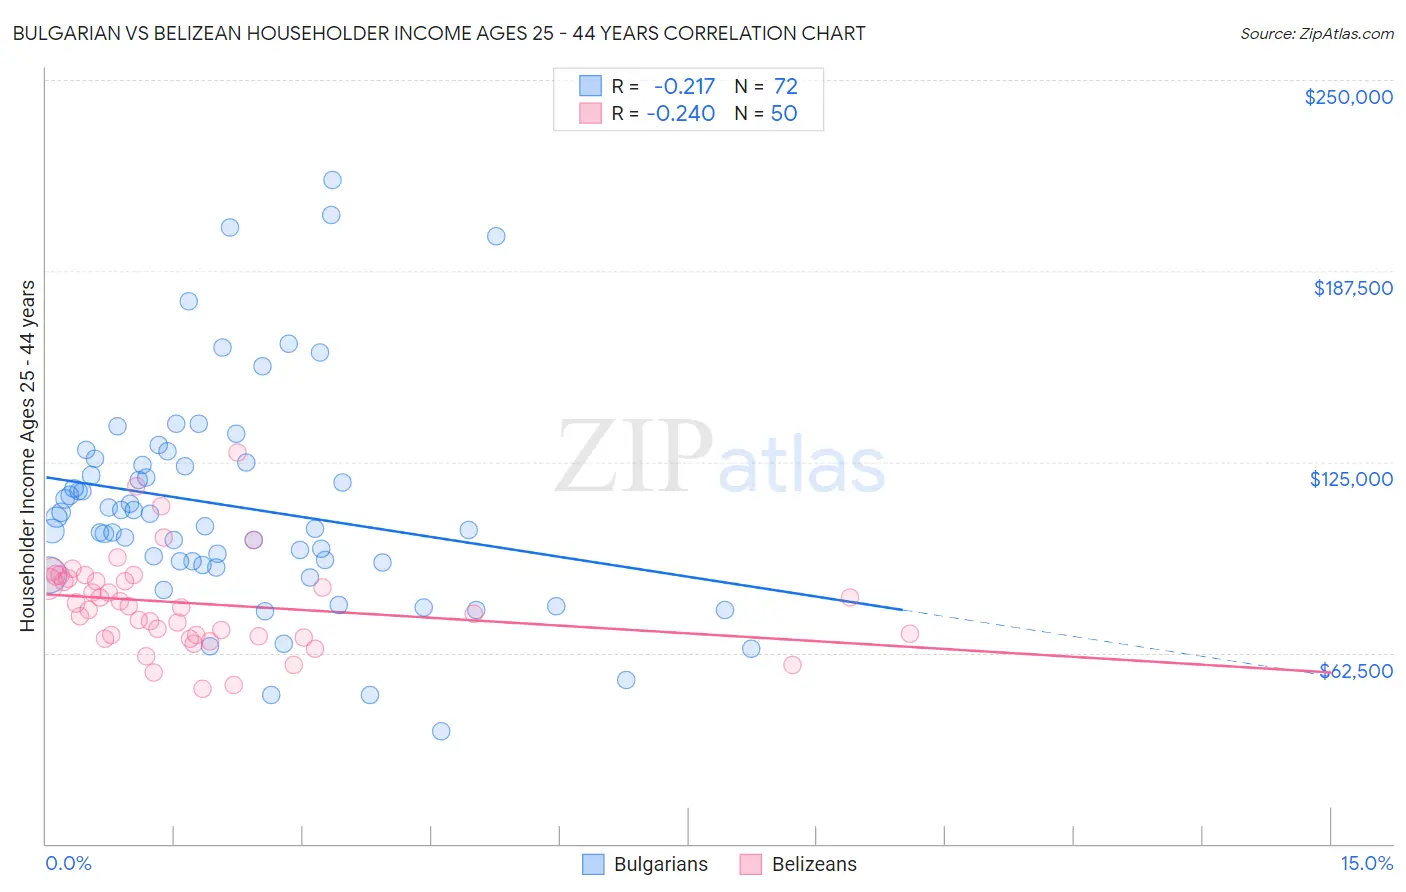 Bulgarian vs Belizean Householder Income Ages 25 - 44 years